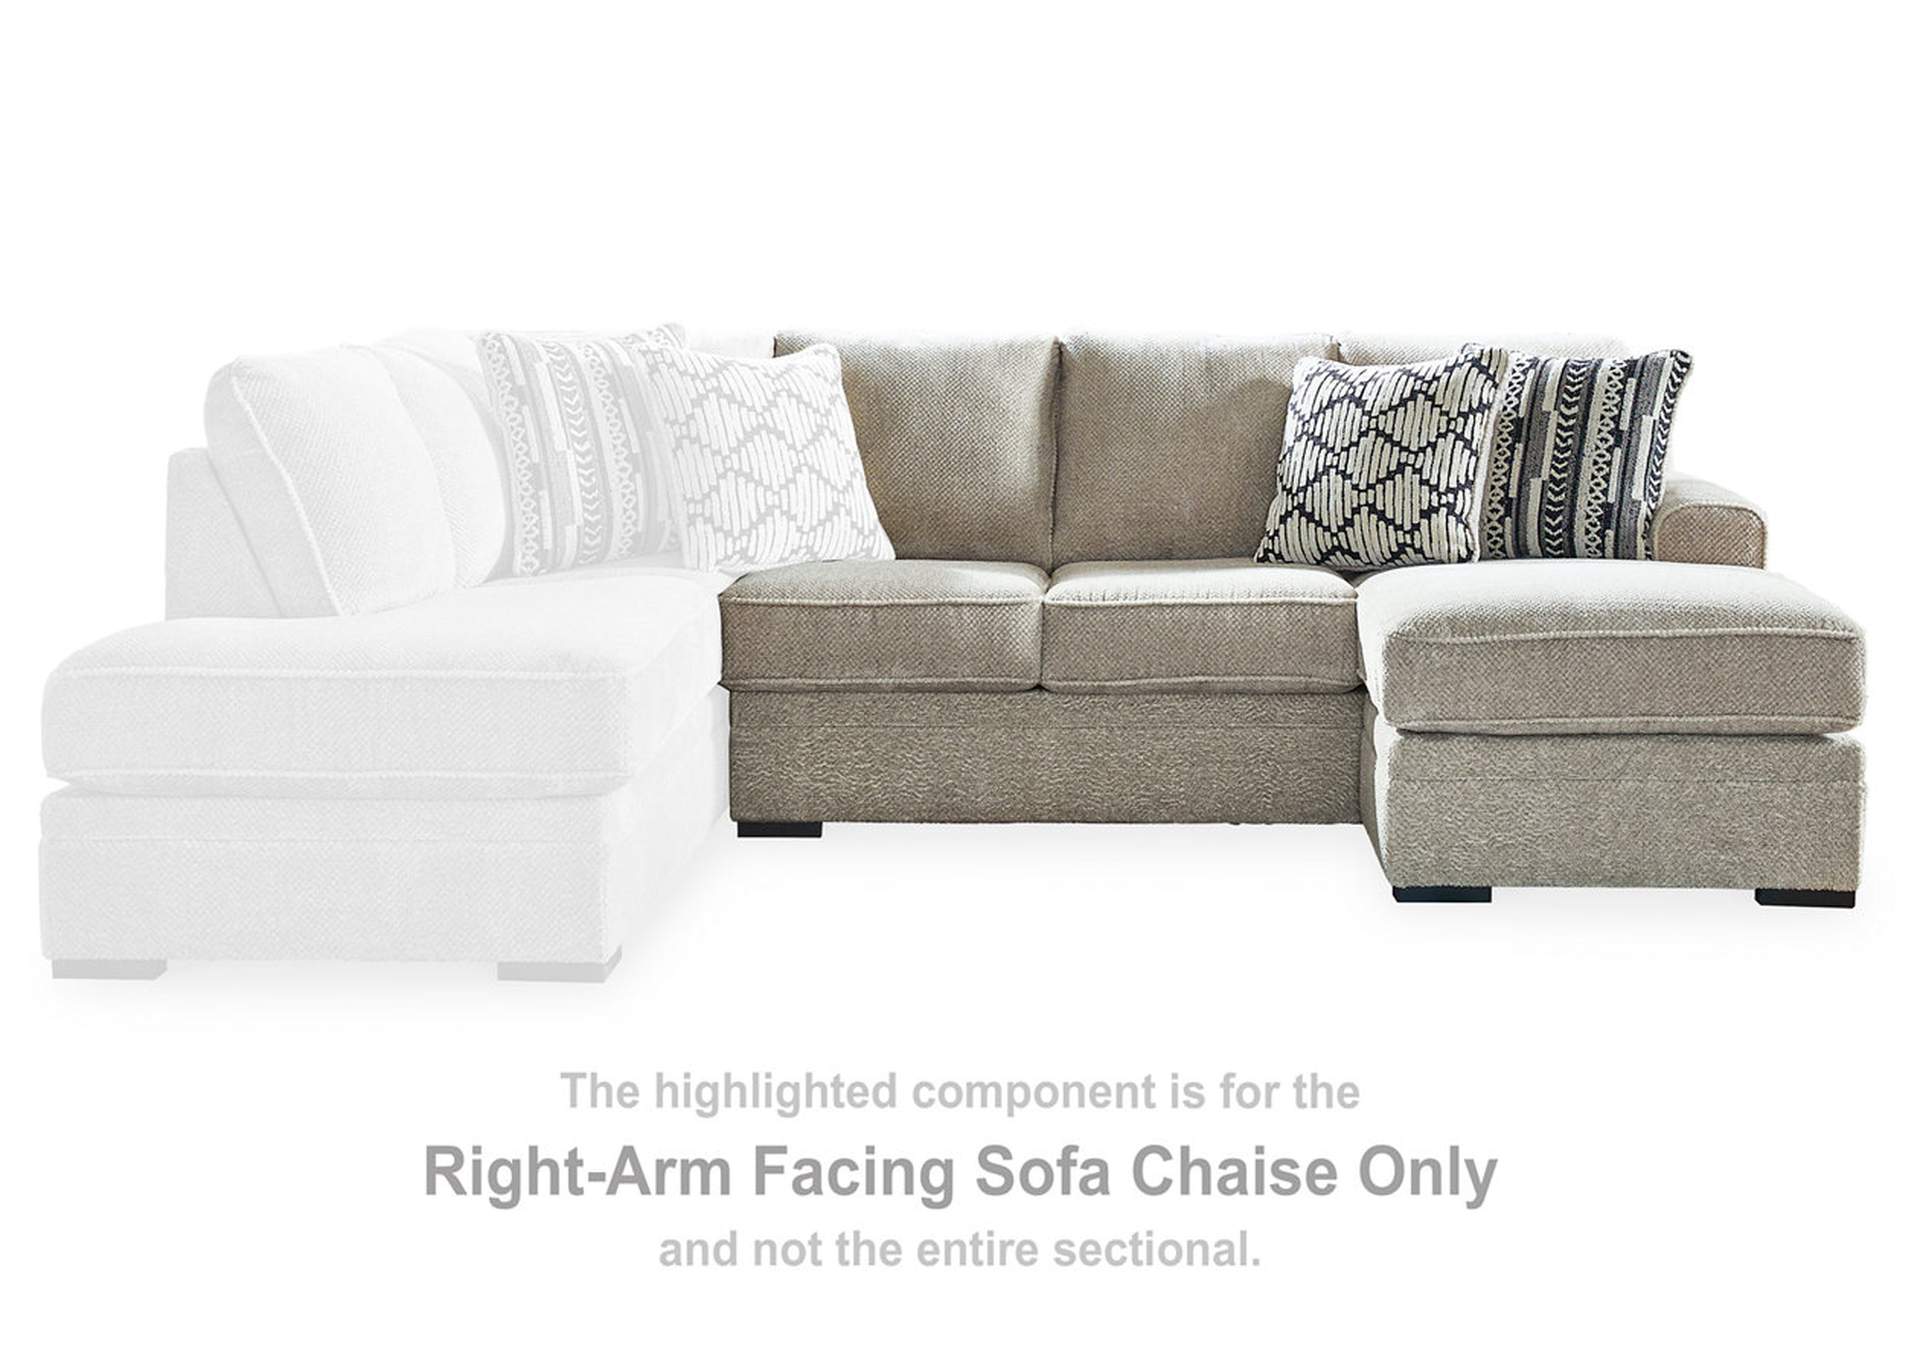 Calnita Right-Arm Facing Sofa Chaise,Benchcraft